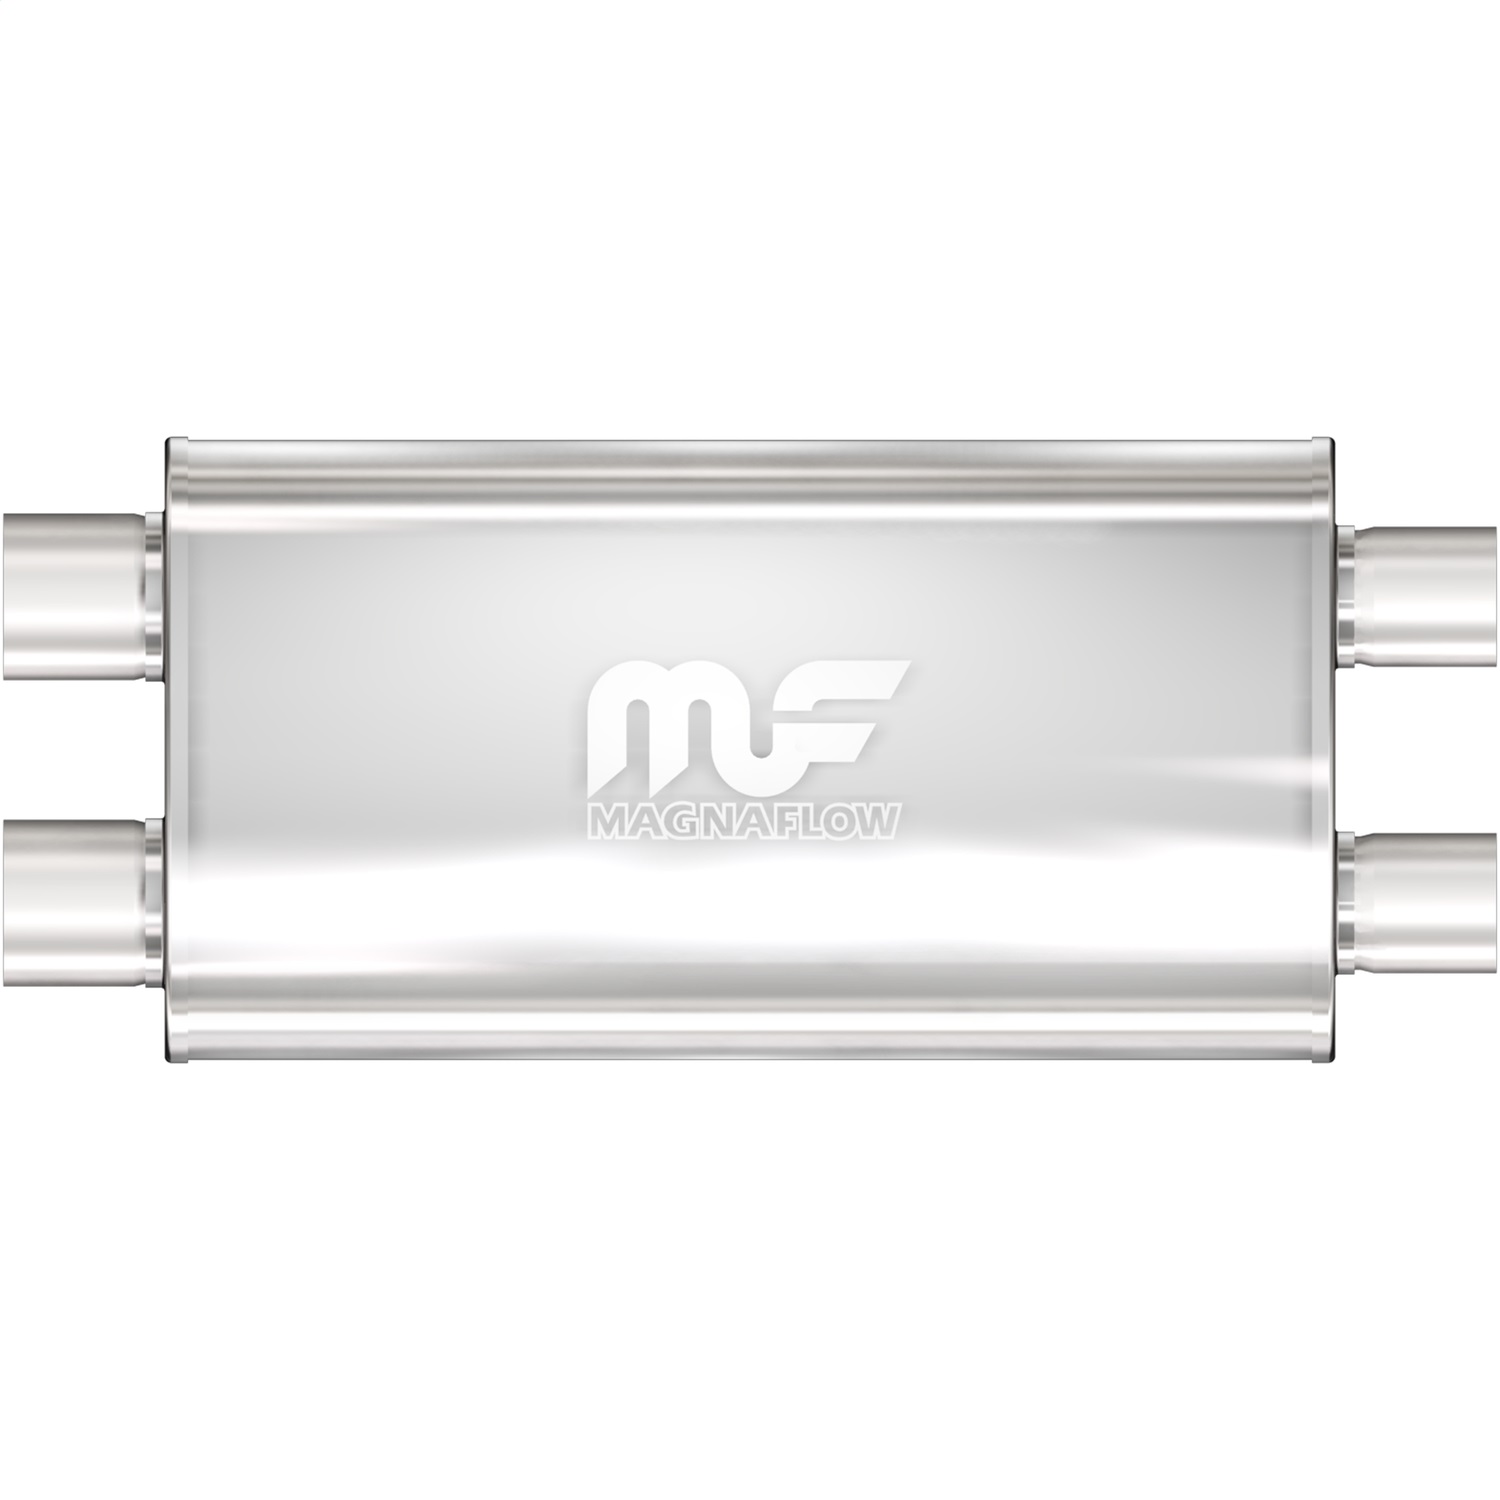 Magnaflow Performance Exhaust Magnaflow Performance Exhaust 12568 Stainless Steel Muffler